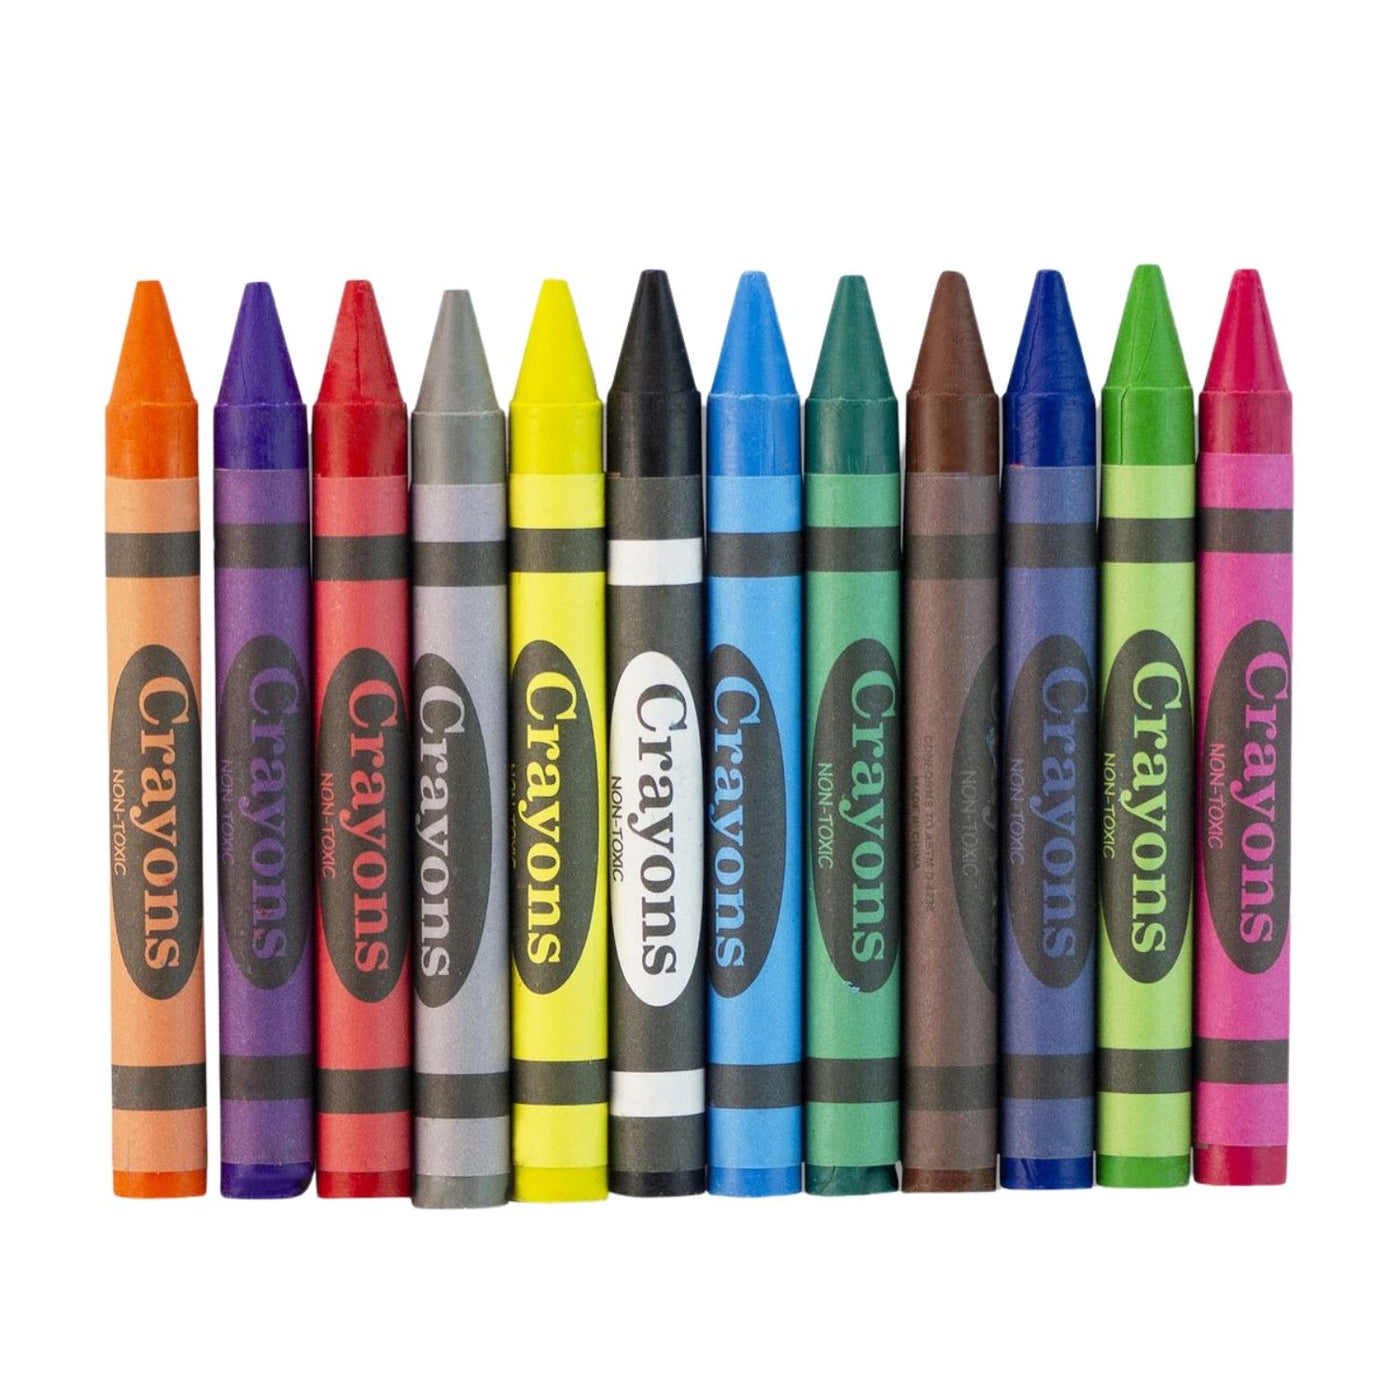 Khoki - Jumbo Wax Crayons - 12 Colours